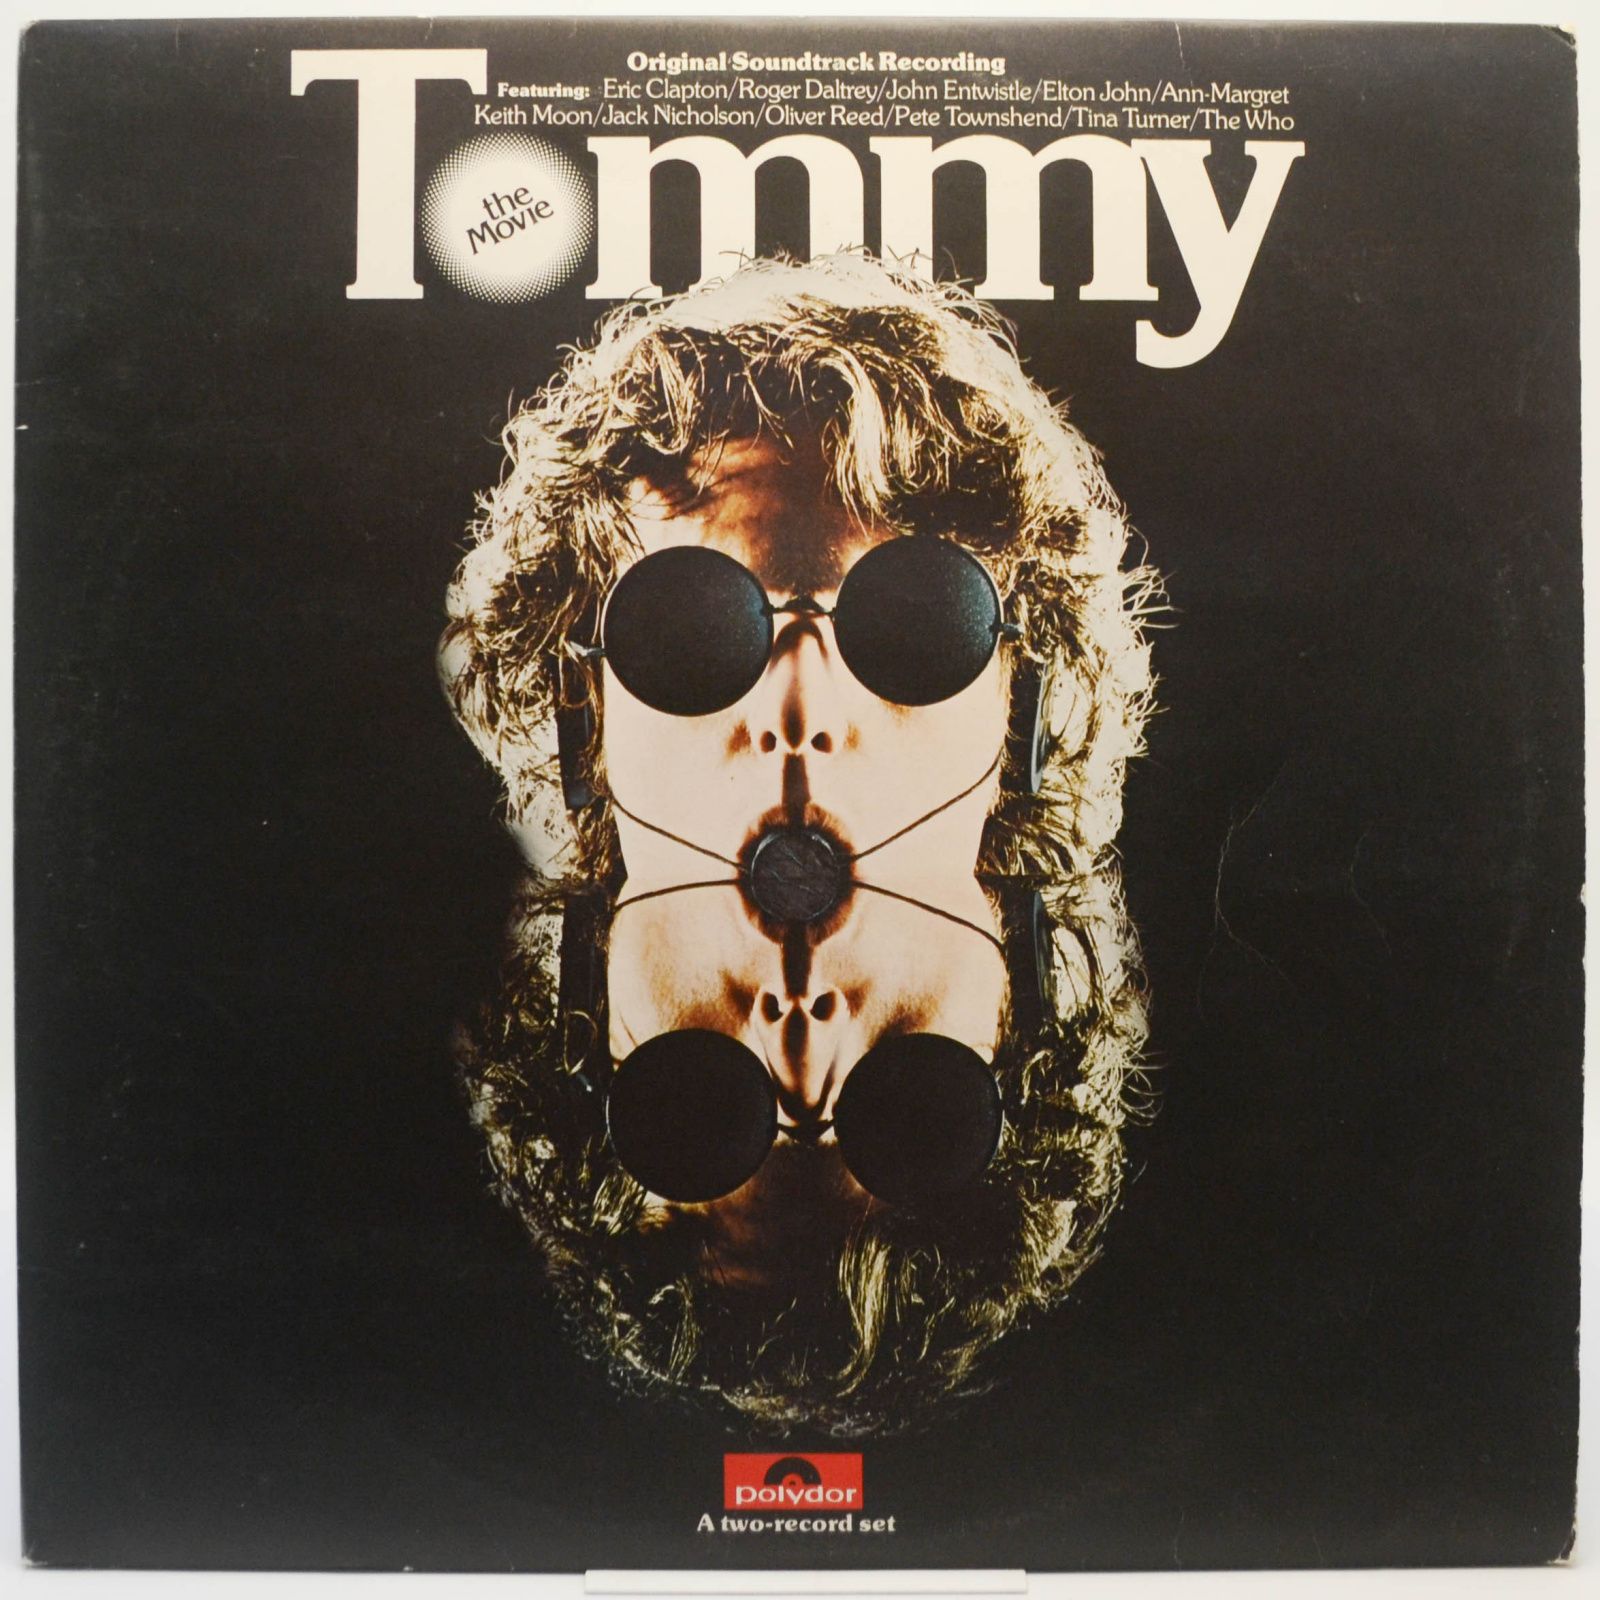 Various — Tommy (Original Soundtrack Recording) (2LP, UK), 1975